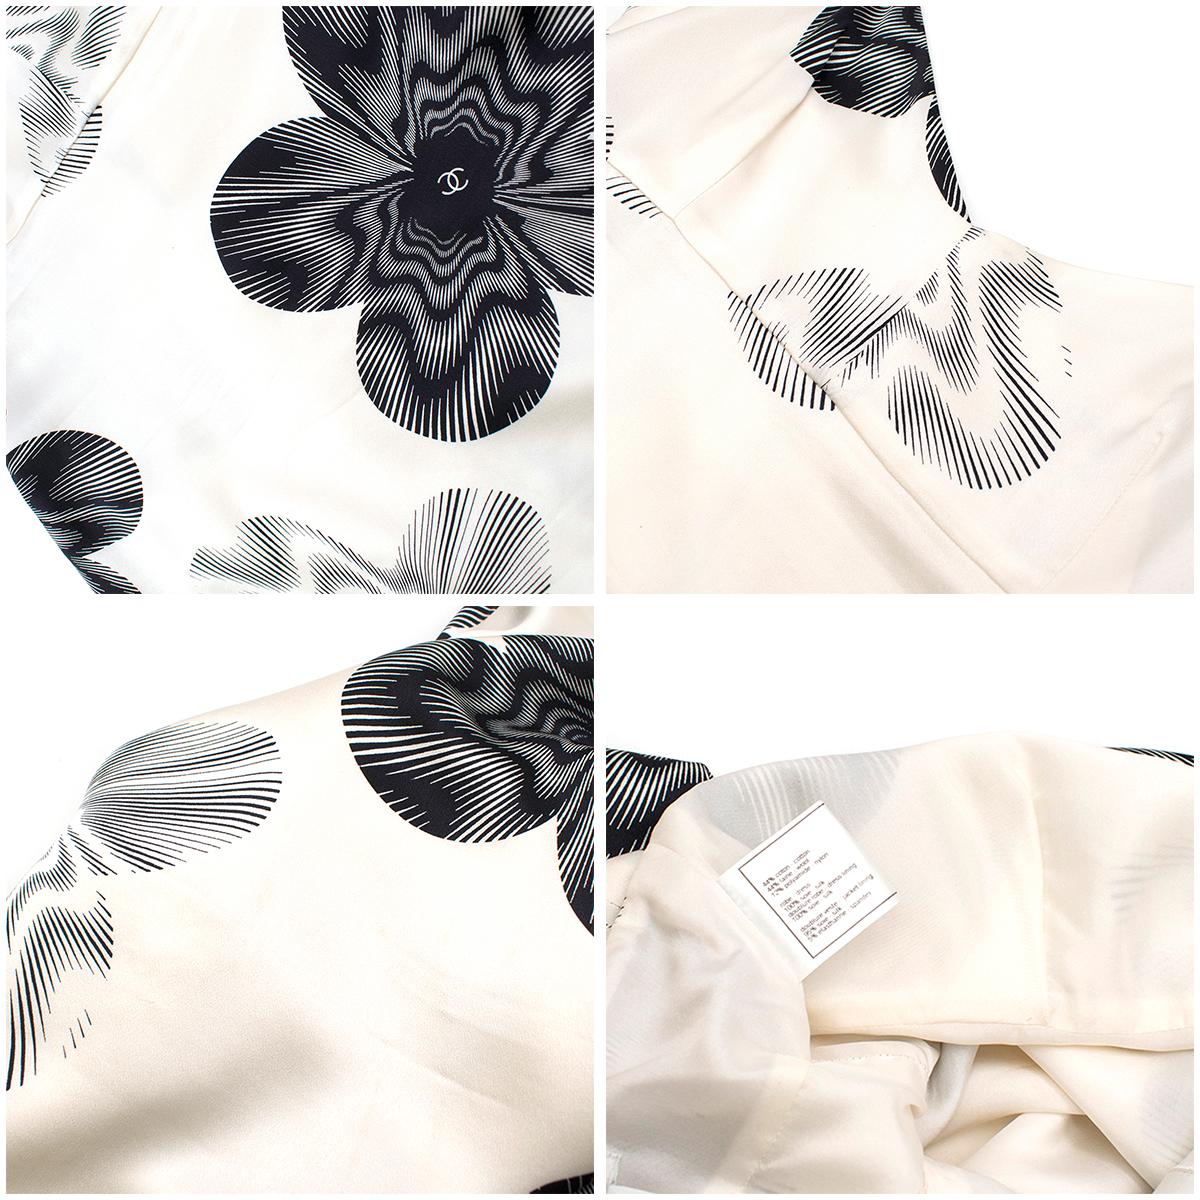 Chanel Cream Silk Floral Patterned Slip Dress SIZE 38 5